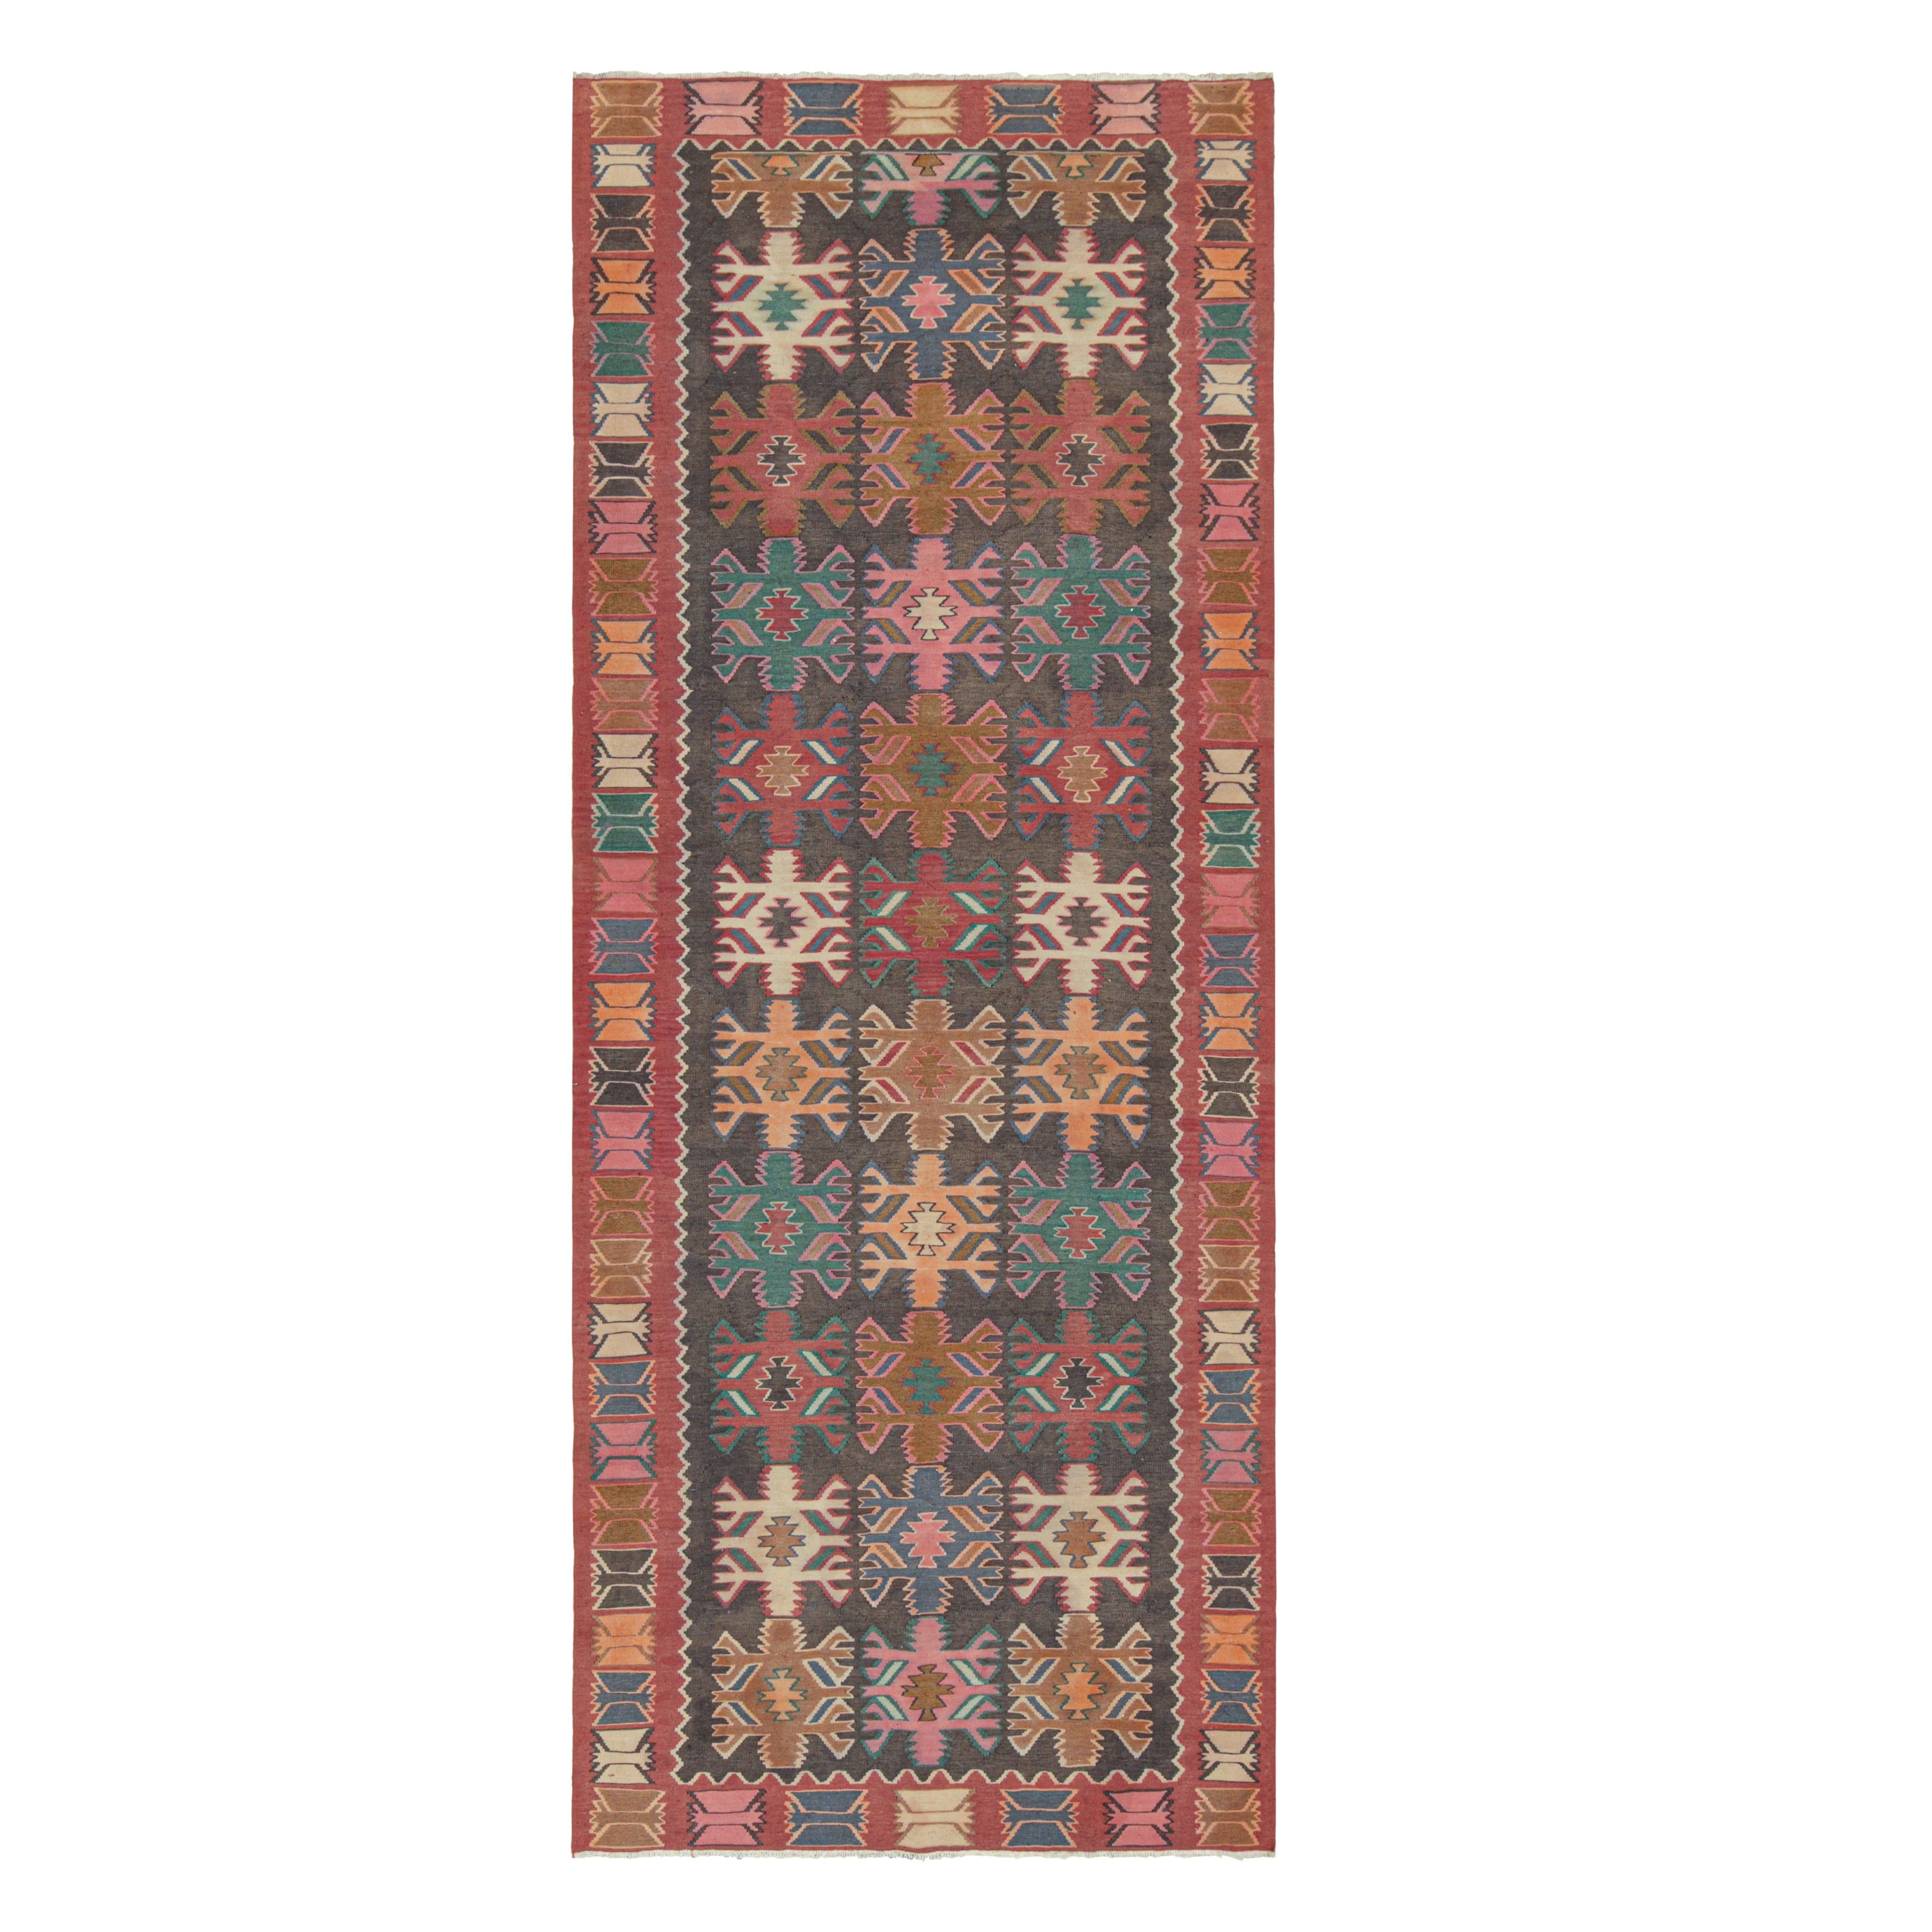 Vintage Persian Kilim in Polychromatic Geometric Patterns by Rug & Kilim